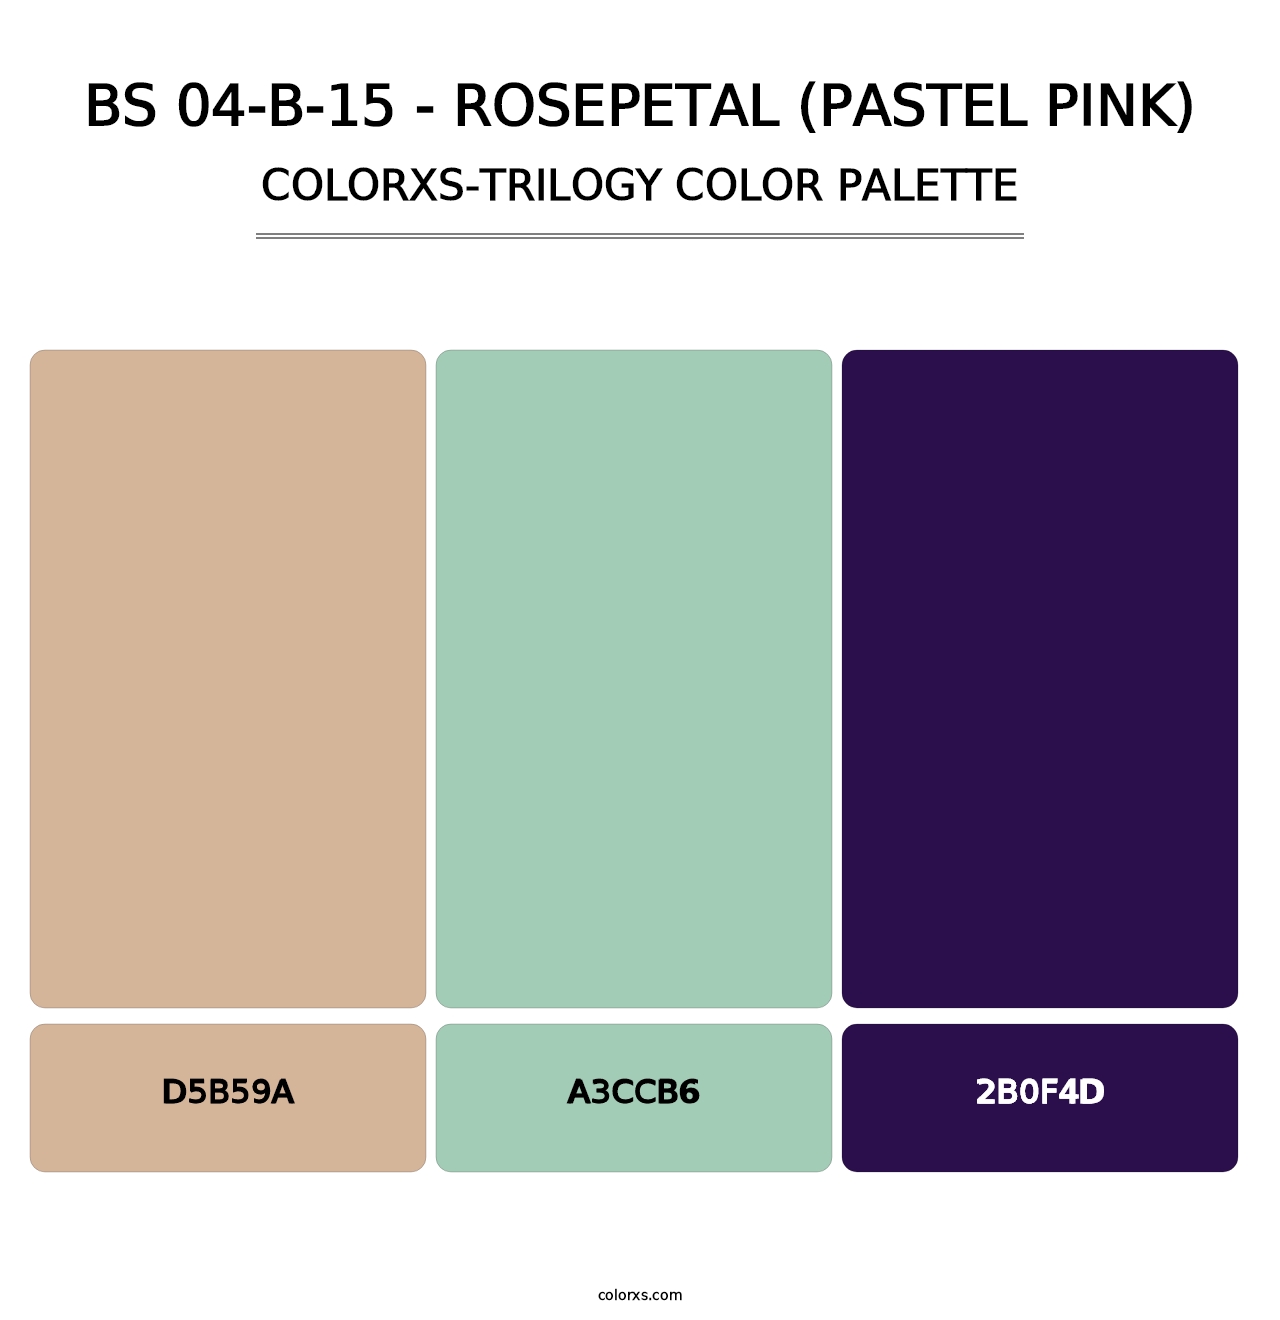 BS 04-B-15 - Rosepetal (Pastel Pink) - Colorxs Trilogy Palette